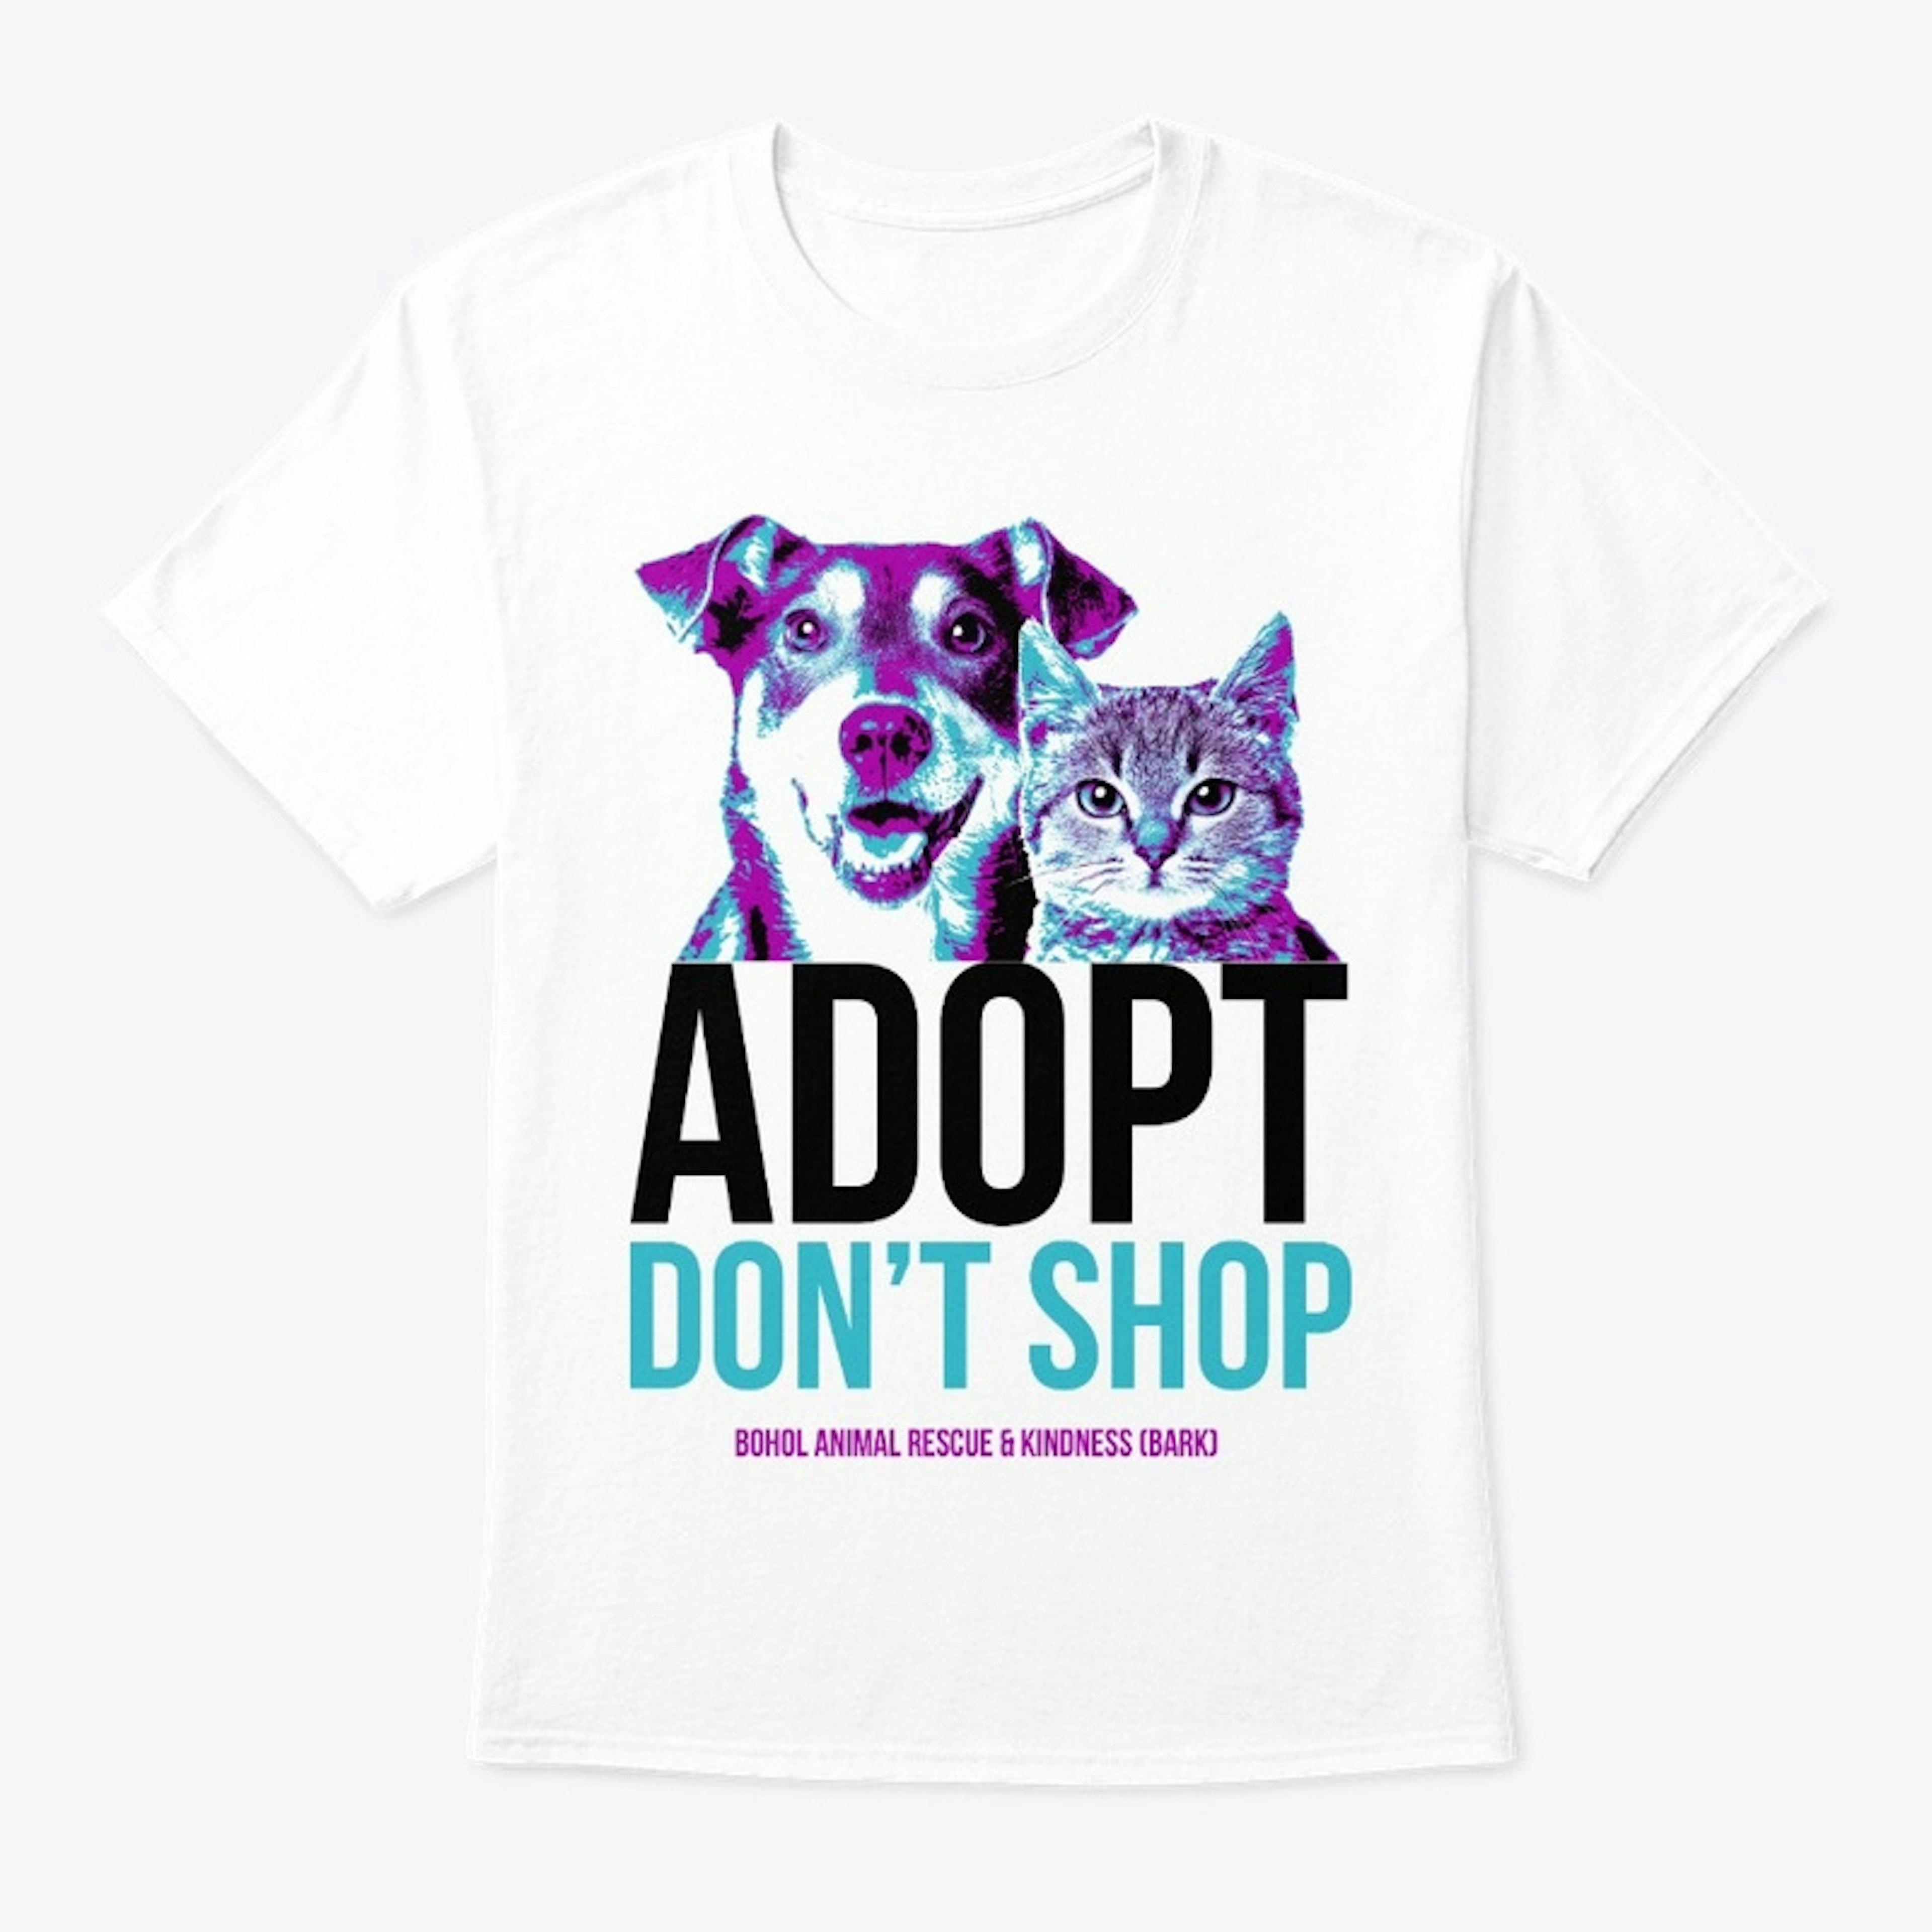 Adopt Don't Shop - BARK